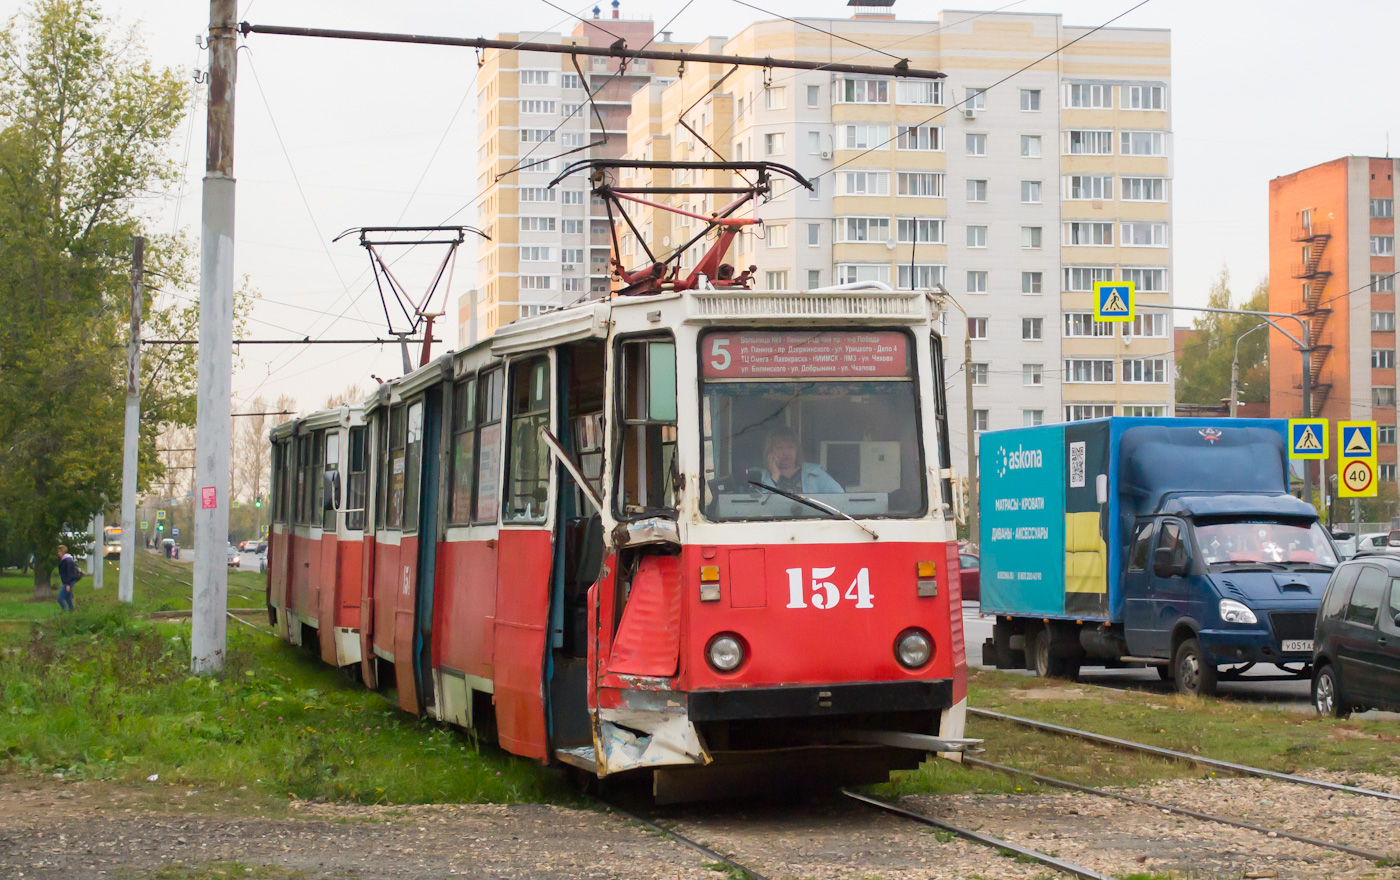 Yaroslavl, 71-605 (KTM-5M3) Nr 154; Yaroslavl — Incidents